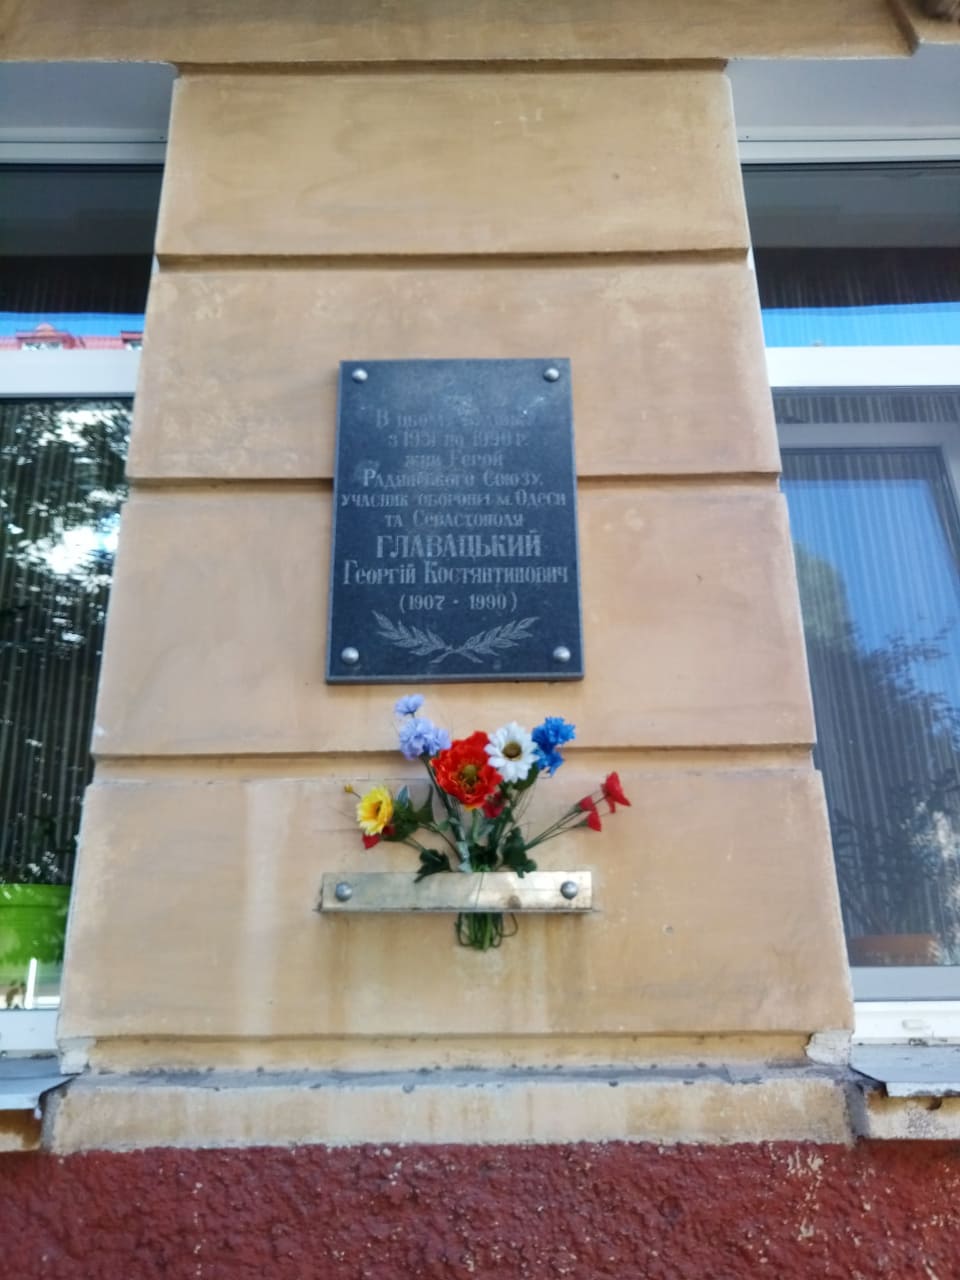 Odesa, Ковальська вулиця, 22. Odesa — Memorial plaques